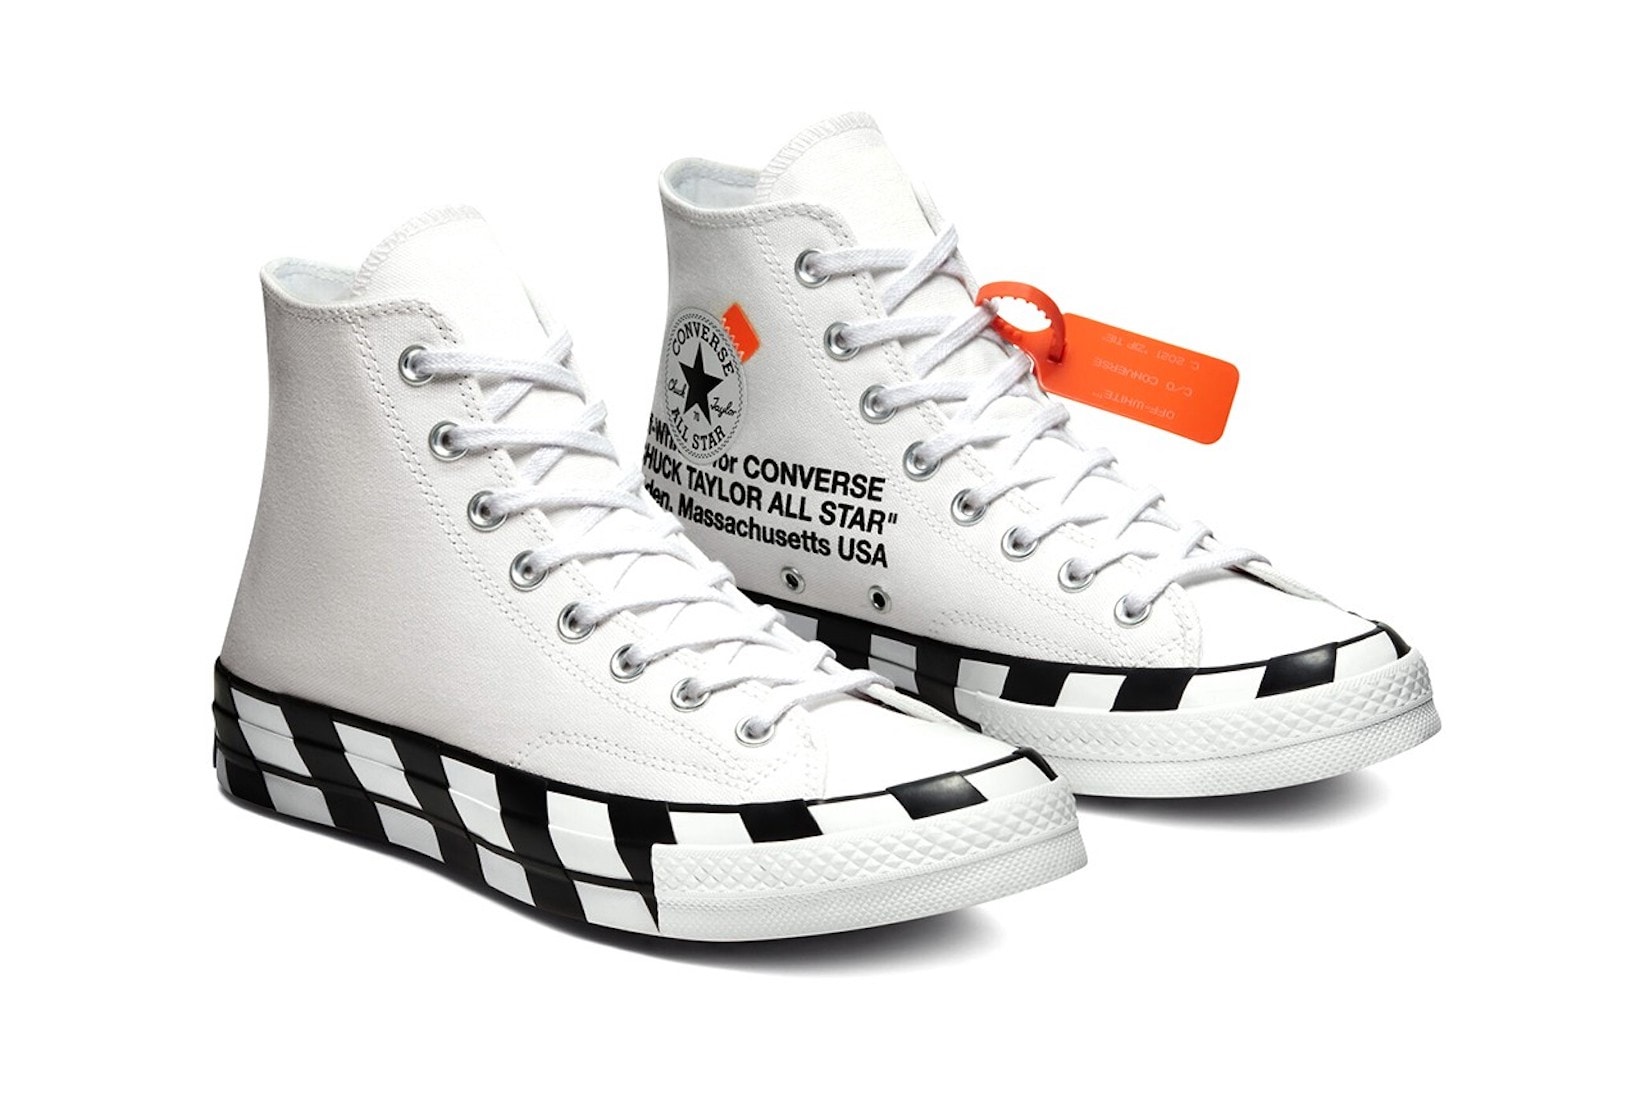 converse off white virgil abloh chuck 70 hi sneakers collaboration white black orange footwear shoes kicks sneakerhead lateral